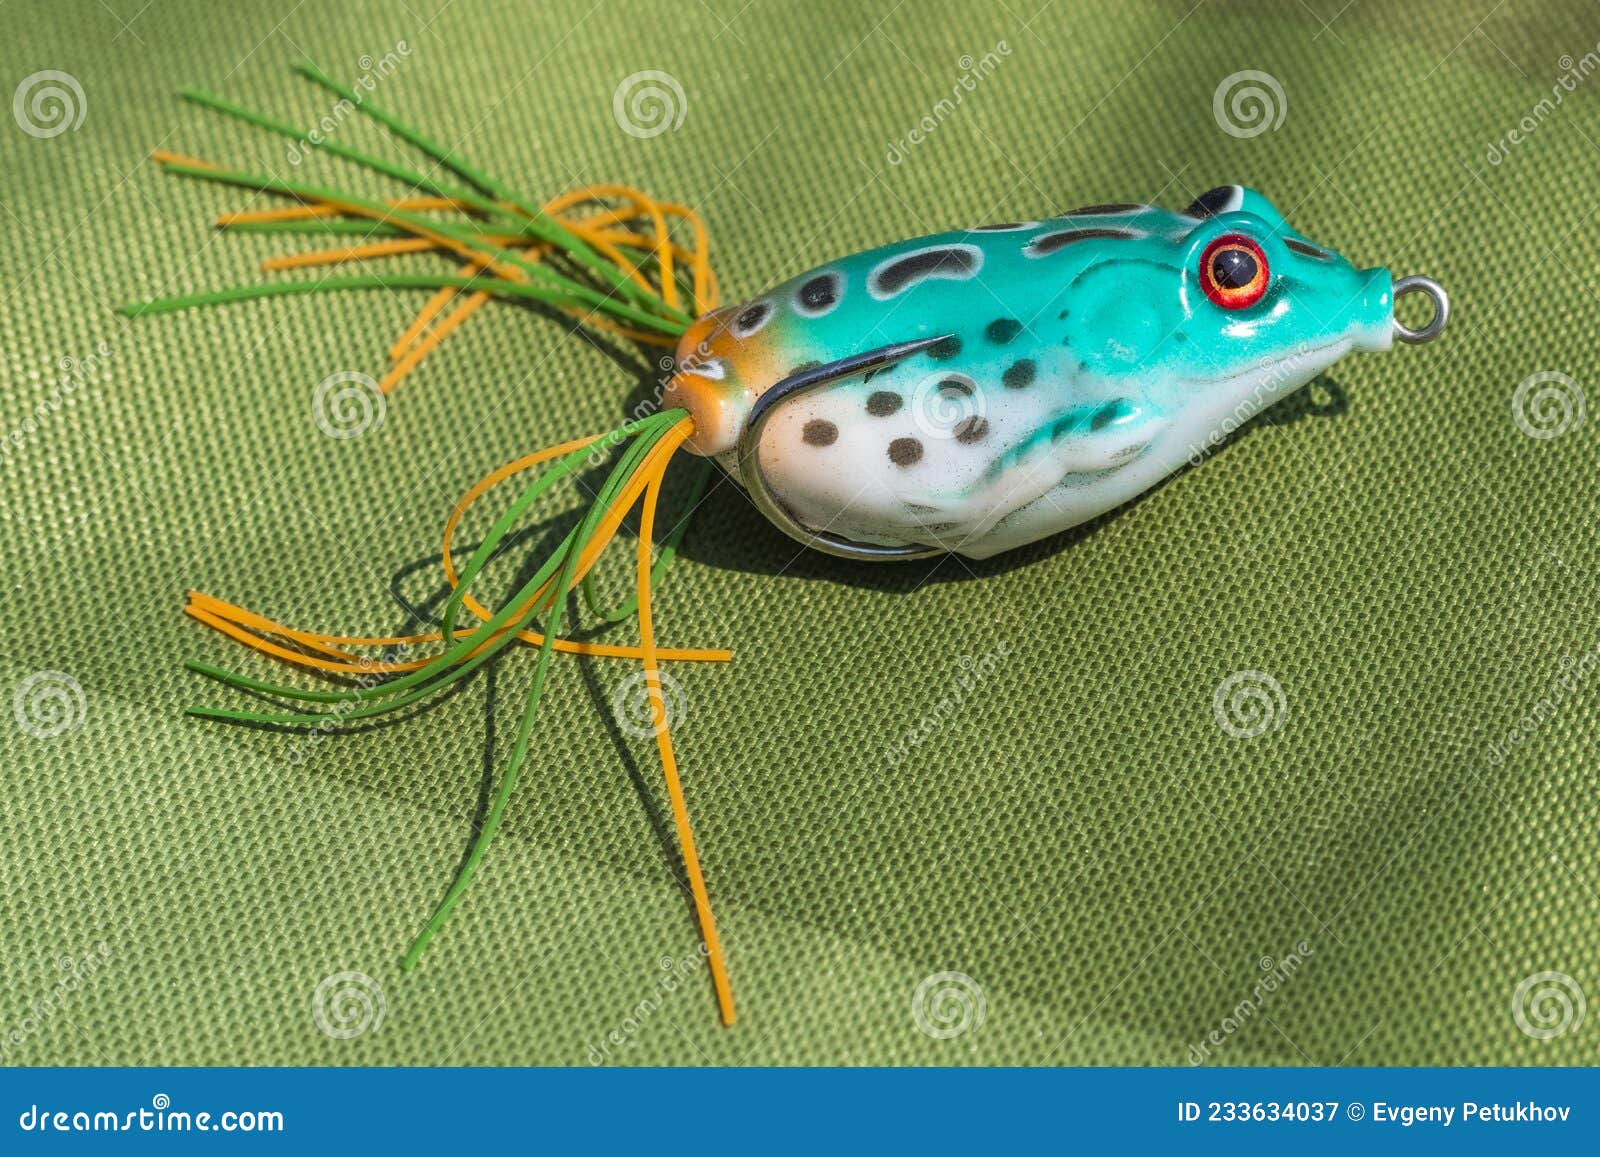 https://thumbs.dreamstime.com/z/fishing-hook-bayman-shape-frog-fishing-bait-green-cloth-background-fishing-hook-bayman-shape-233634037.jpg